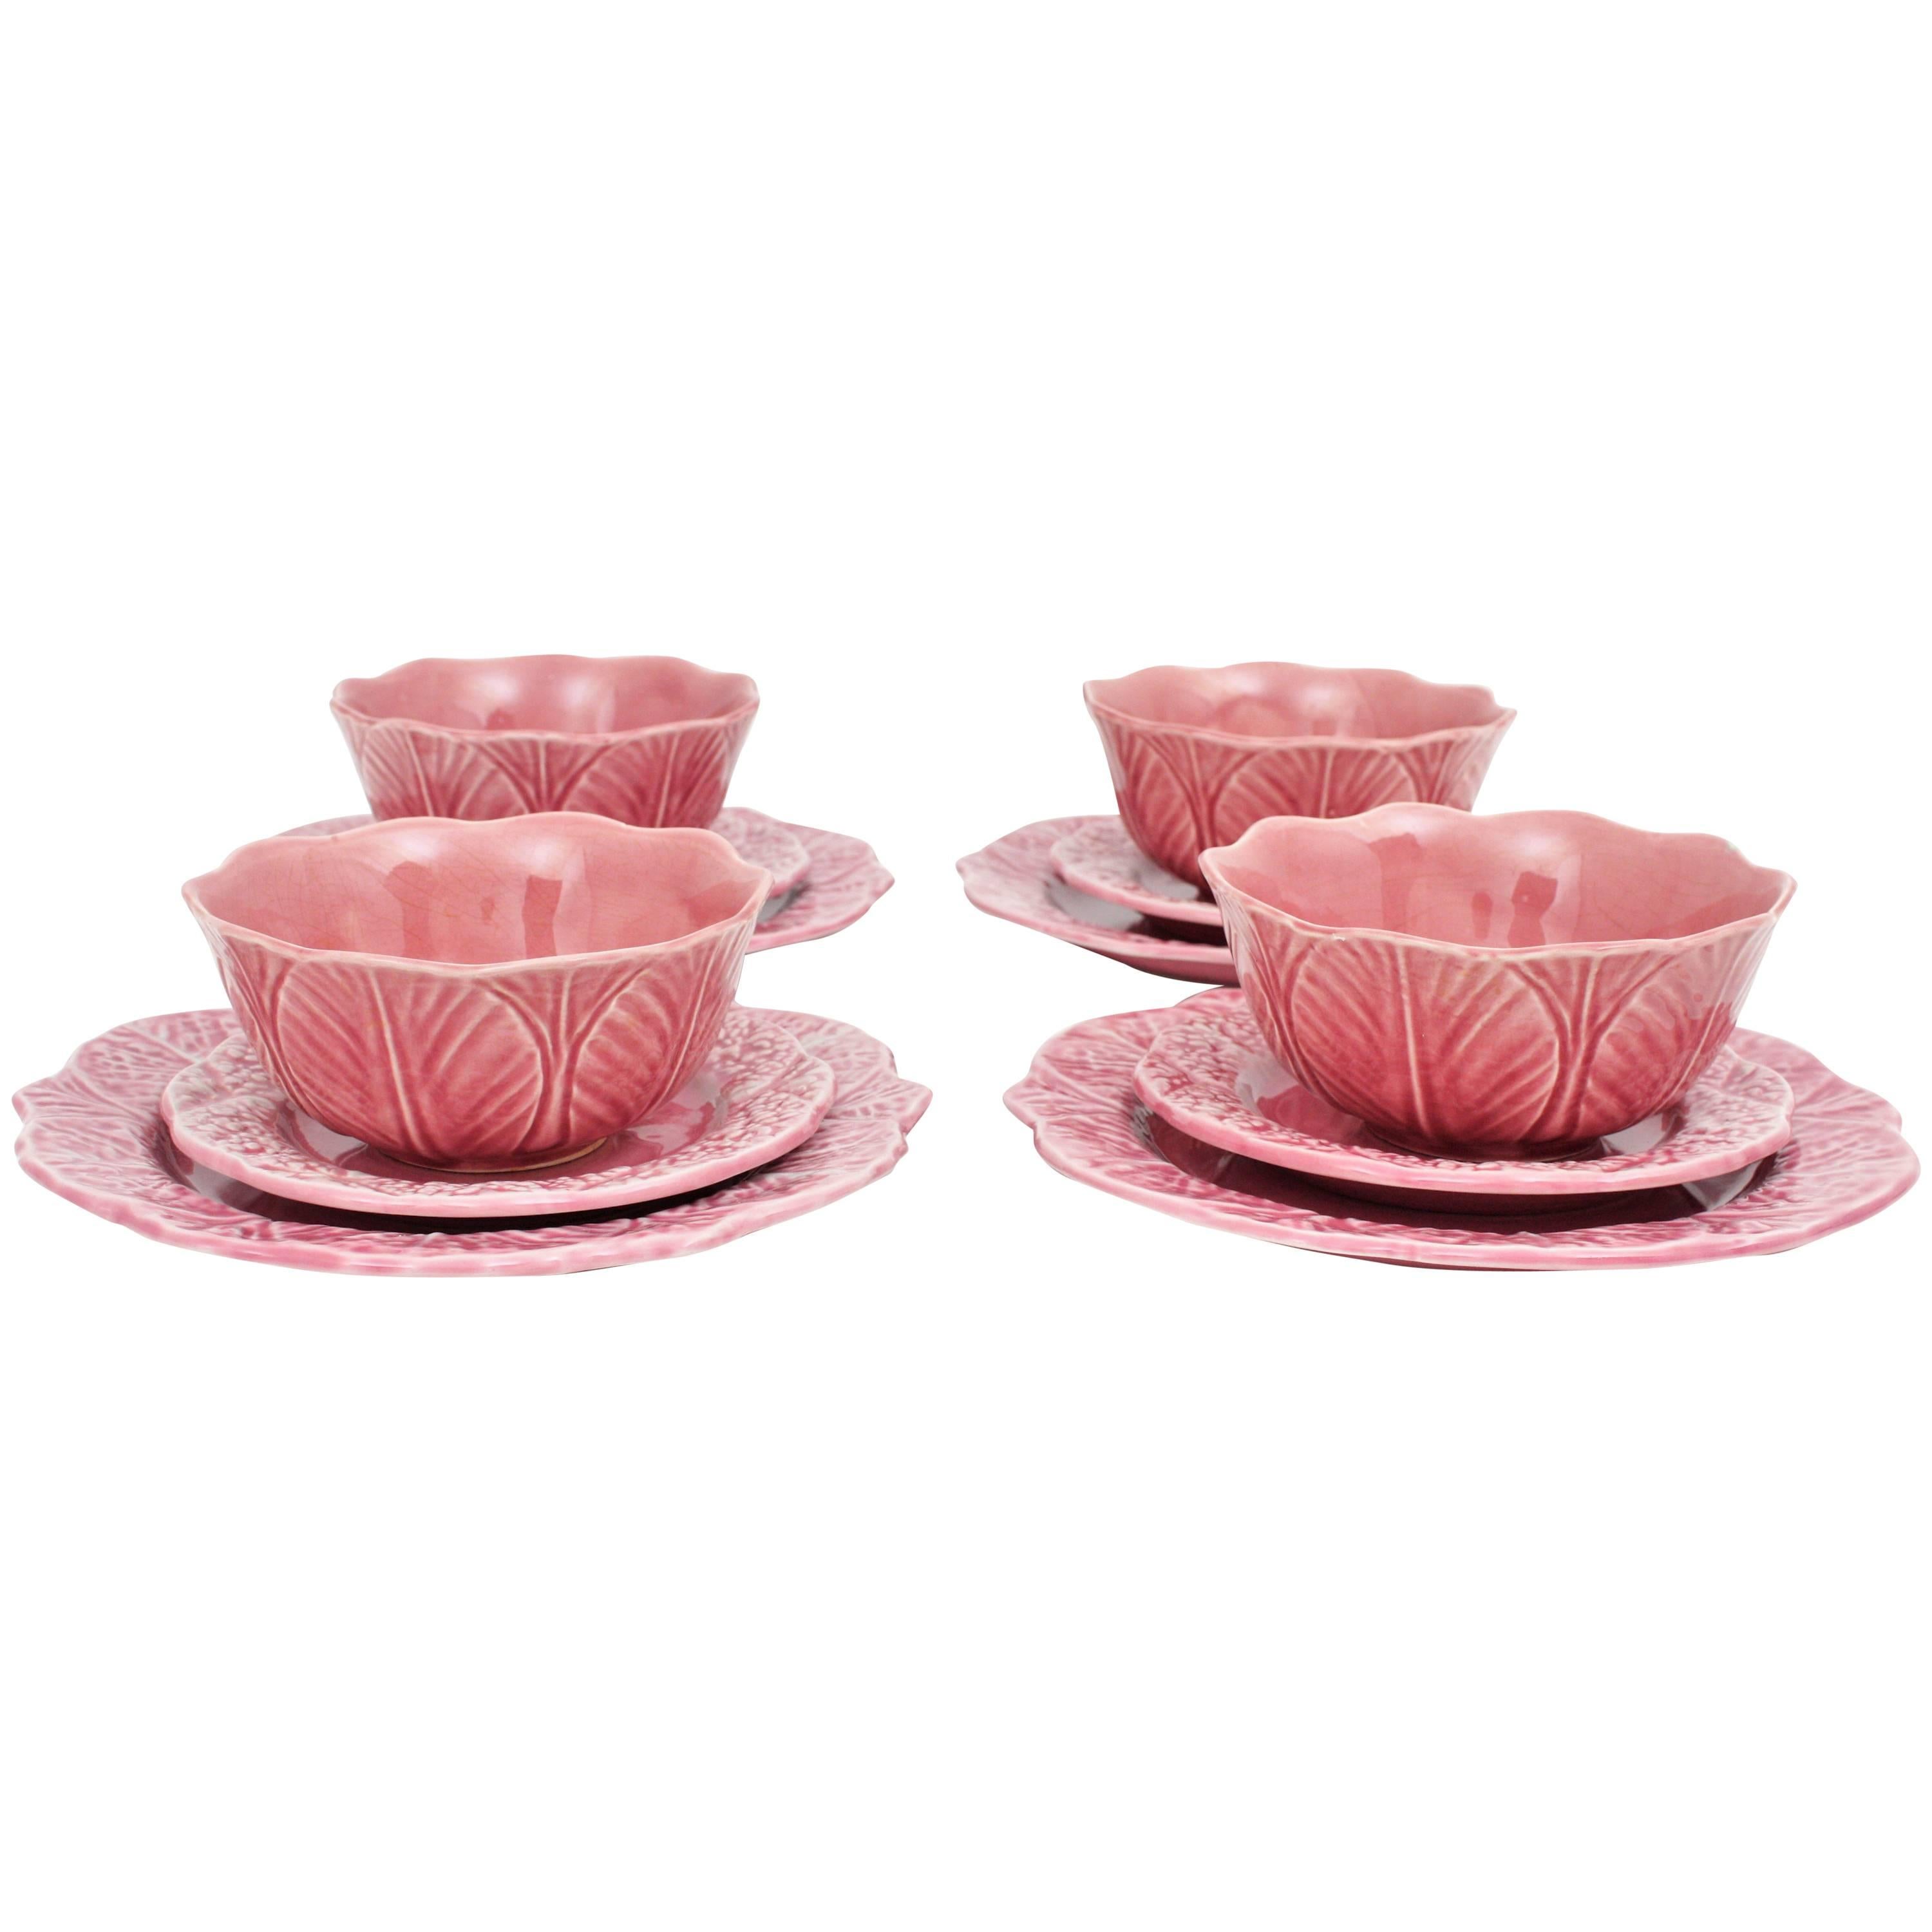 pink ceramic plates